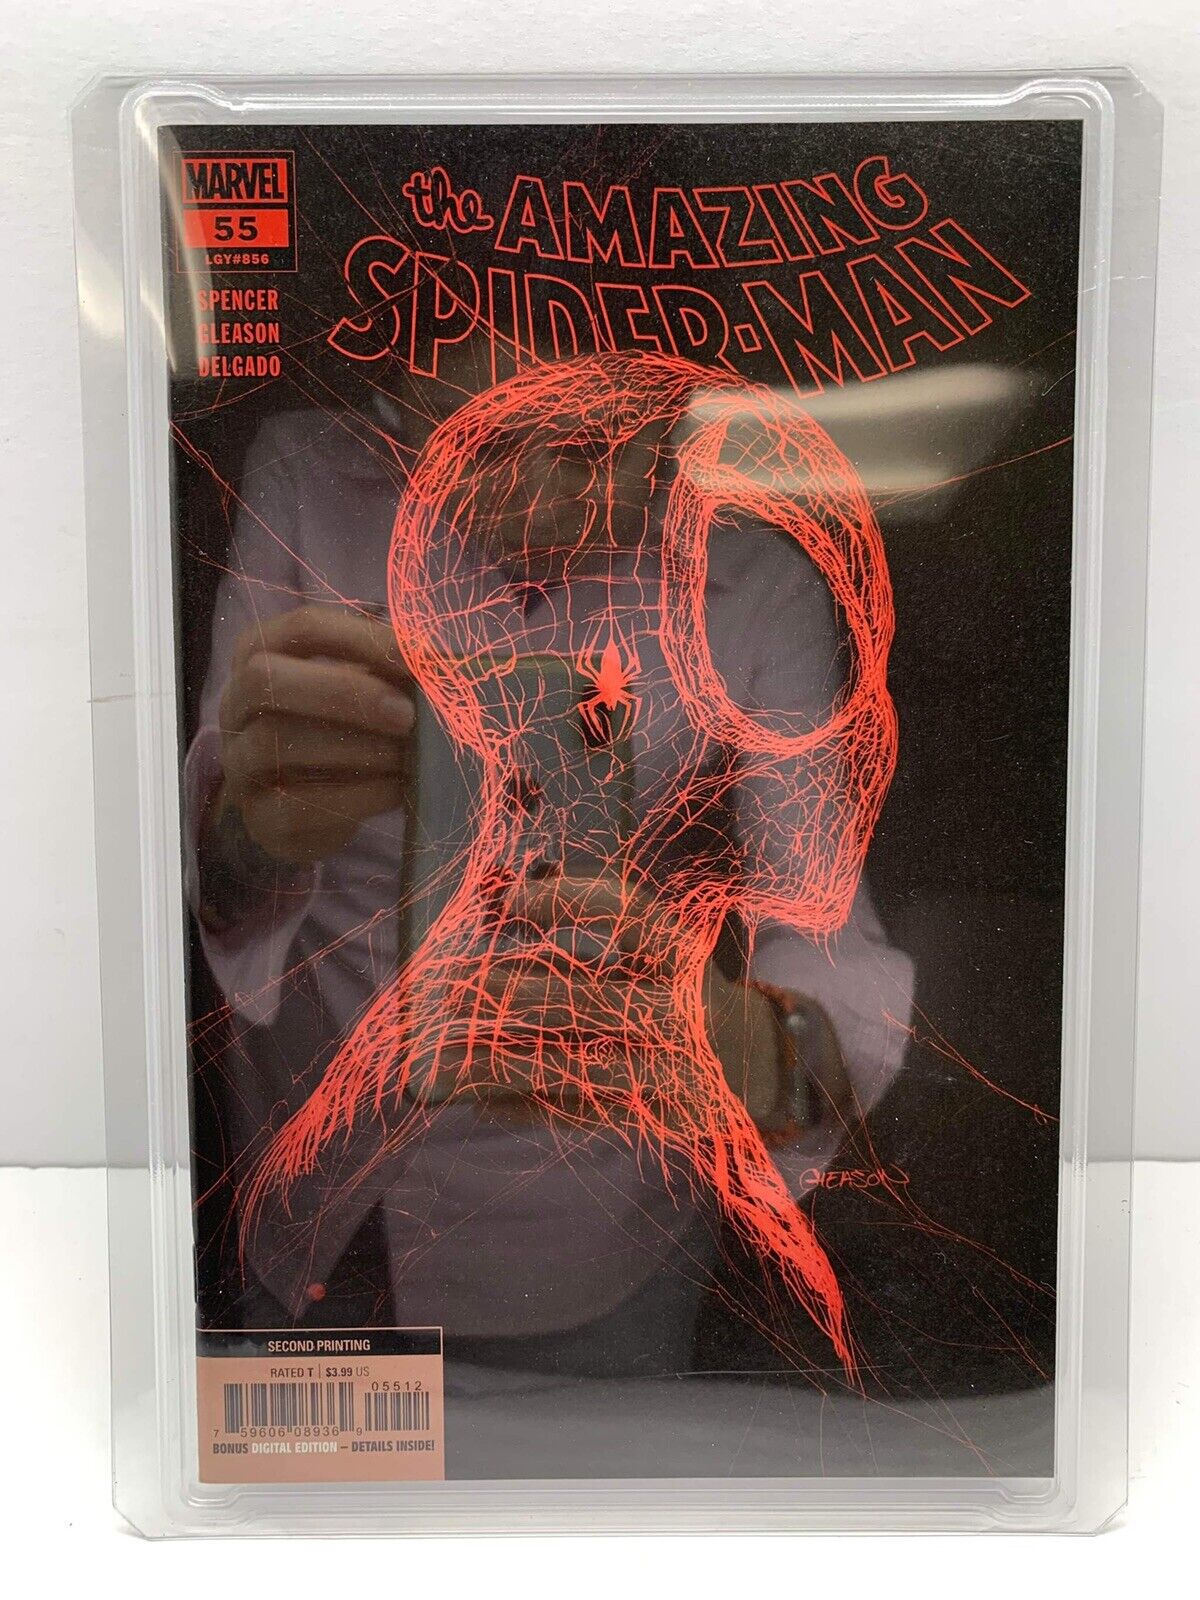 Marvel Comics The Amazing Spider-Man #55 2021 Spencer Gleason Delgado 2nd Print